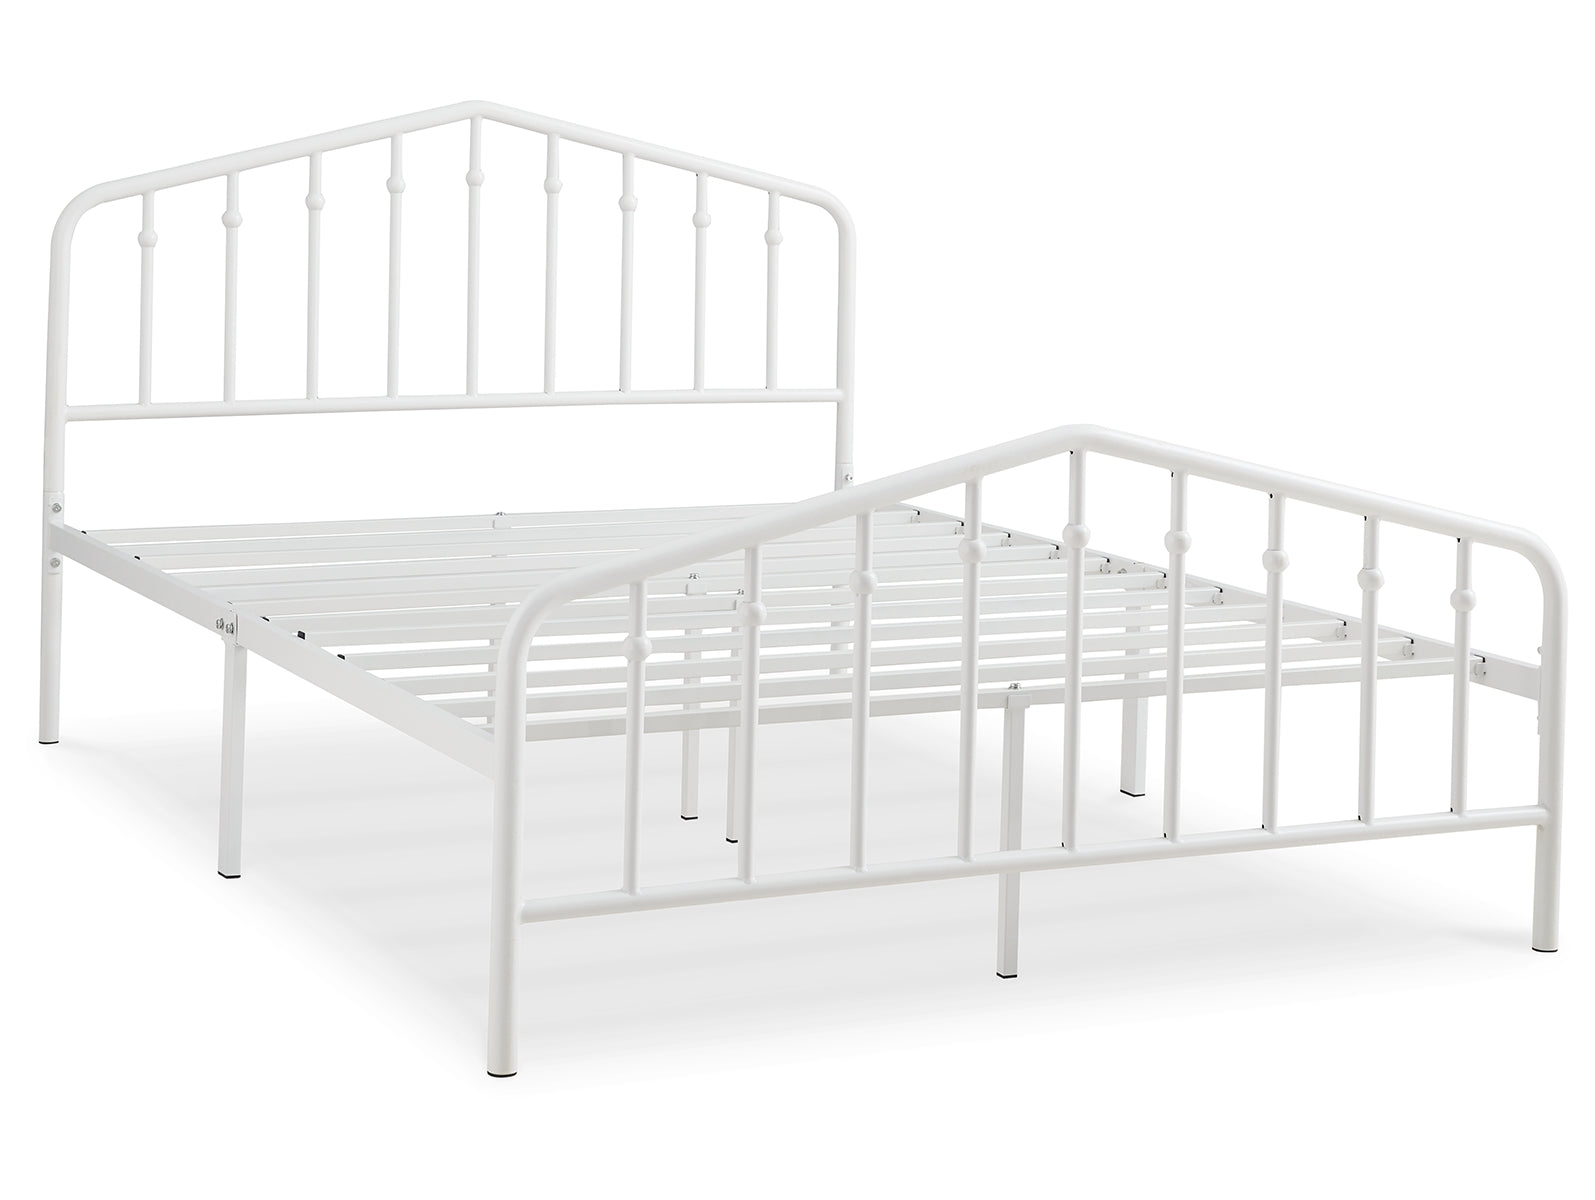 Trentlore Full Metal Bed